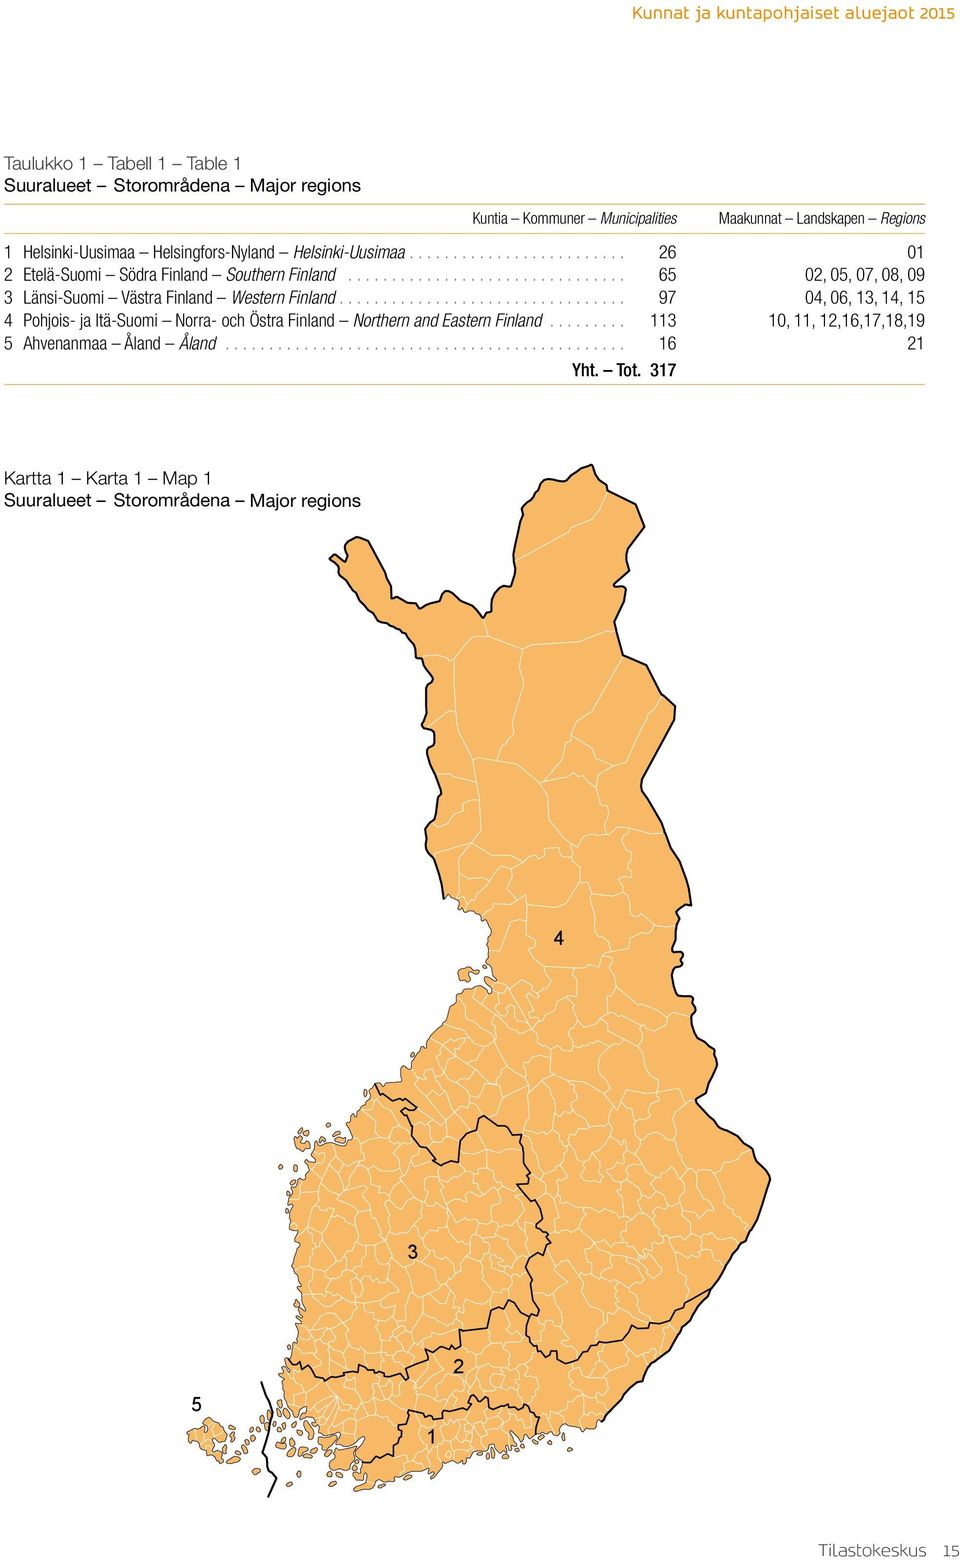 Västra Finland Western Finland 97 04, 06, 13, 14, 15 4 Pohjois- ja Itä-Suomi Norra- och Östra Finland Northern and Eastern Finland 113 10,